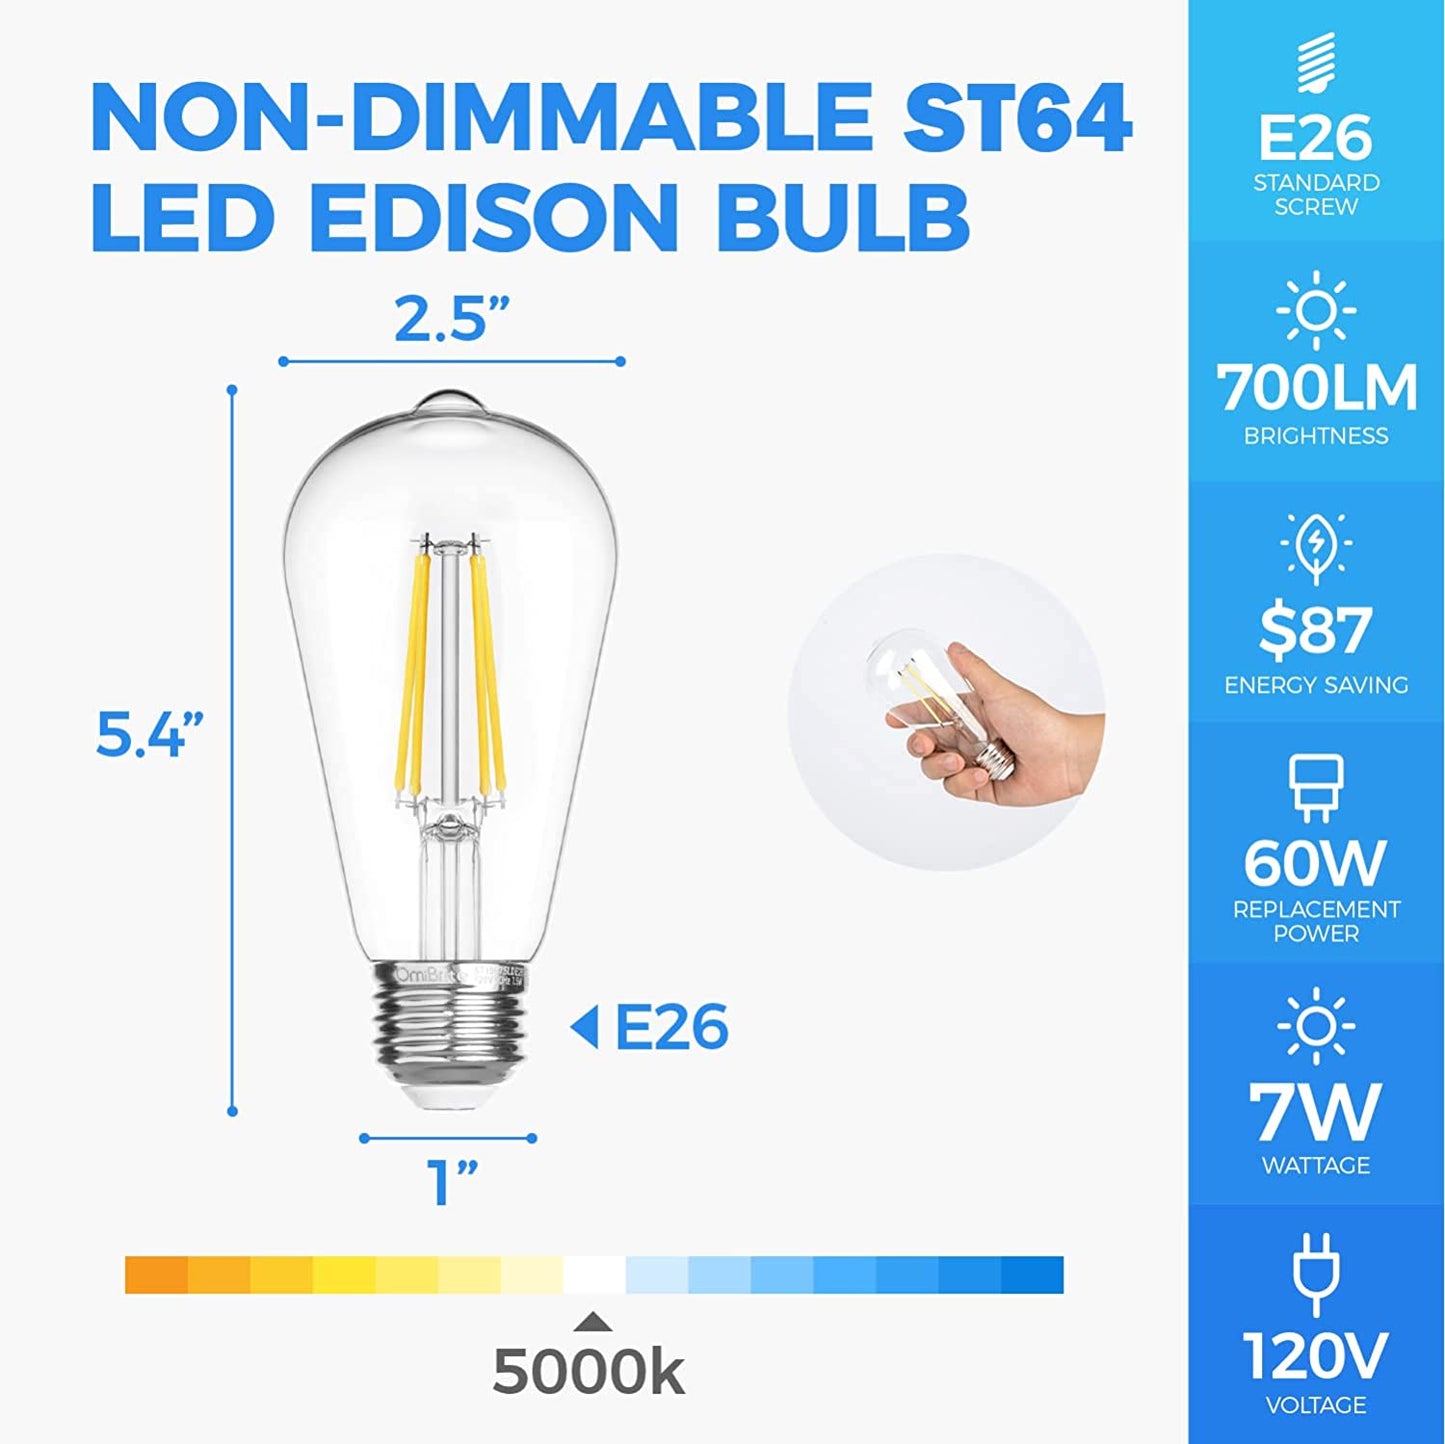 OmiBrite Edison Led Light Bulbs, Vintage Bright Light Bulbs 60 Watt Equivalent, Non-dimmable Incandescent Daylight Bulbs, Bright Daylight 5000K, CRI 90 Eye Protection, E26/E27 Base, ST64 (6 Pack)